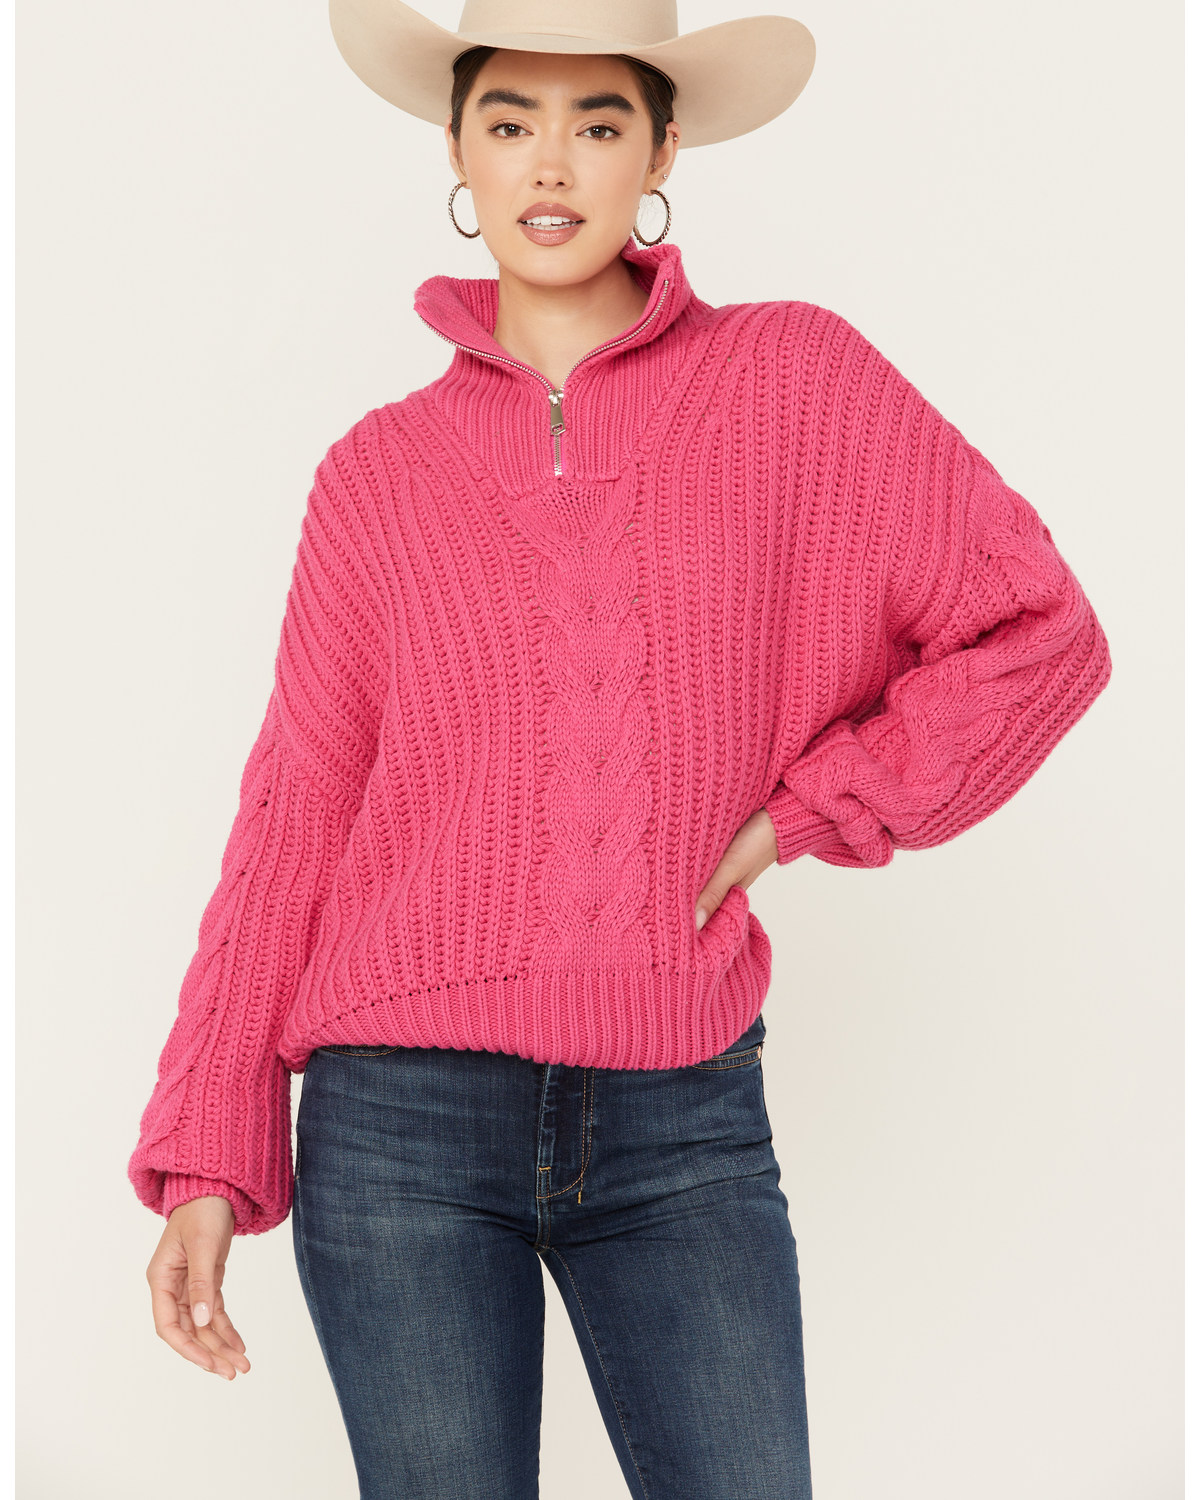 Revel Women's Quarter Zip Cable Knit Sweater